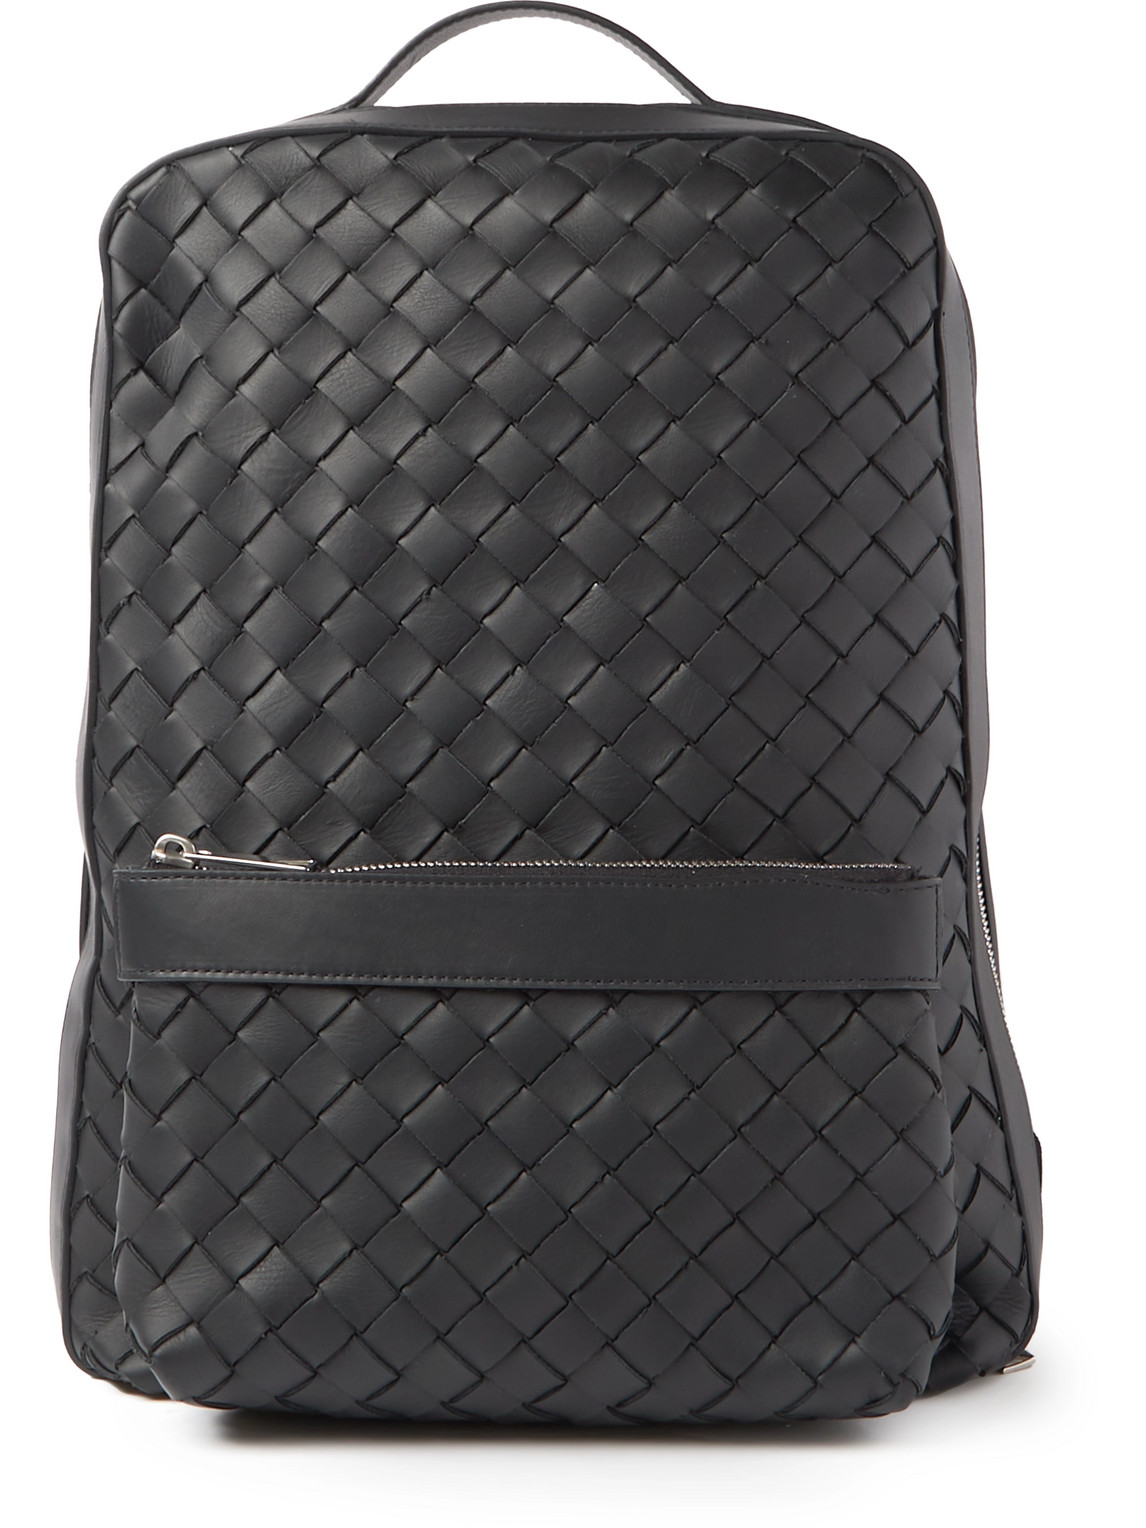 Bottega Veneta Small Intrecciato Leather Backpack